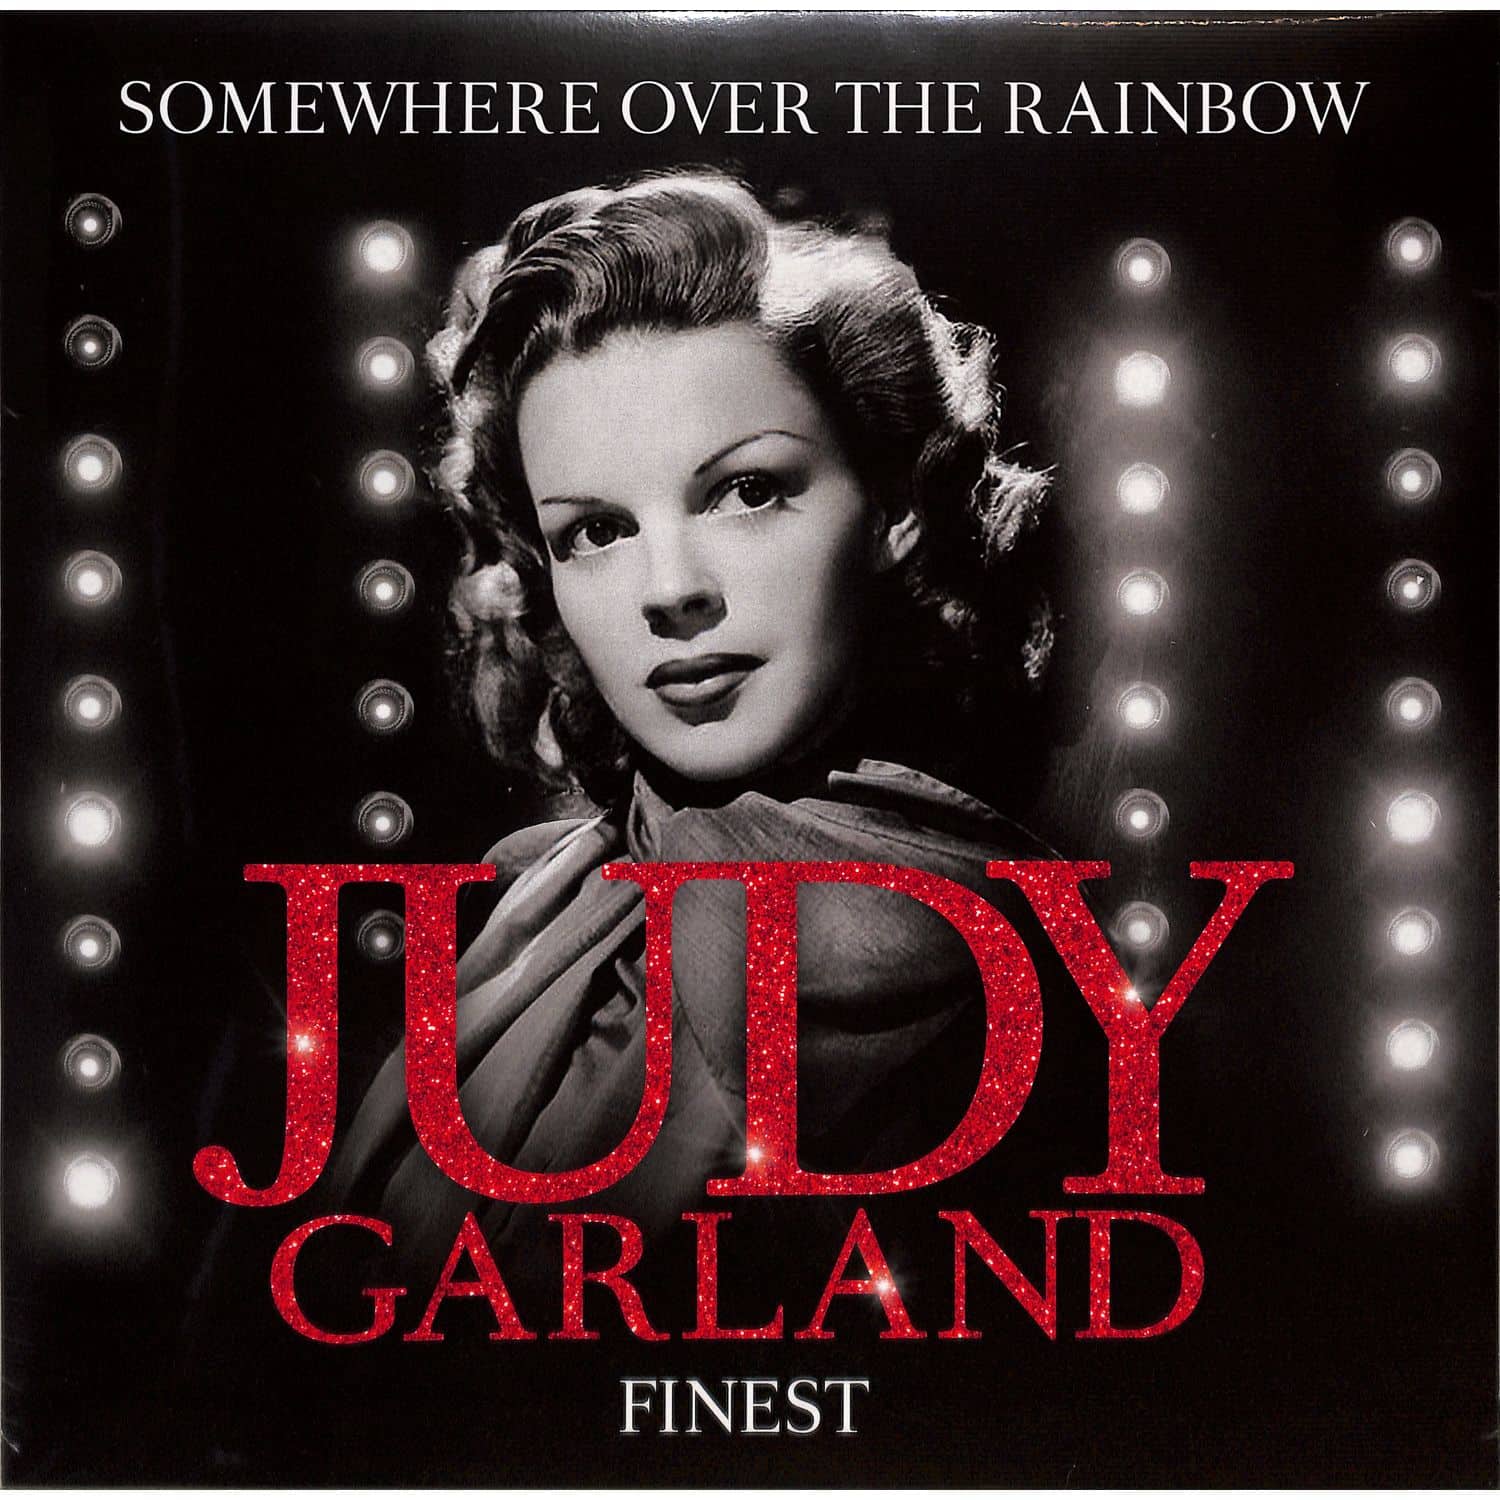 Judy Garland - FINEST-SOMEWHERE OVER THE RAINBOW 